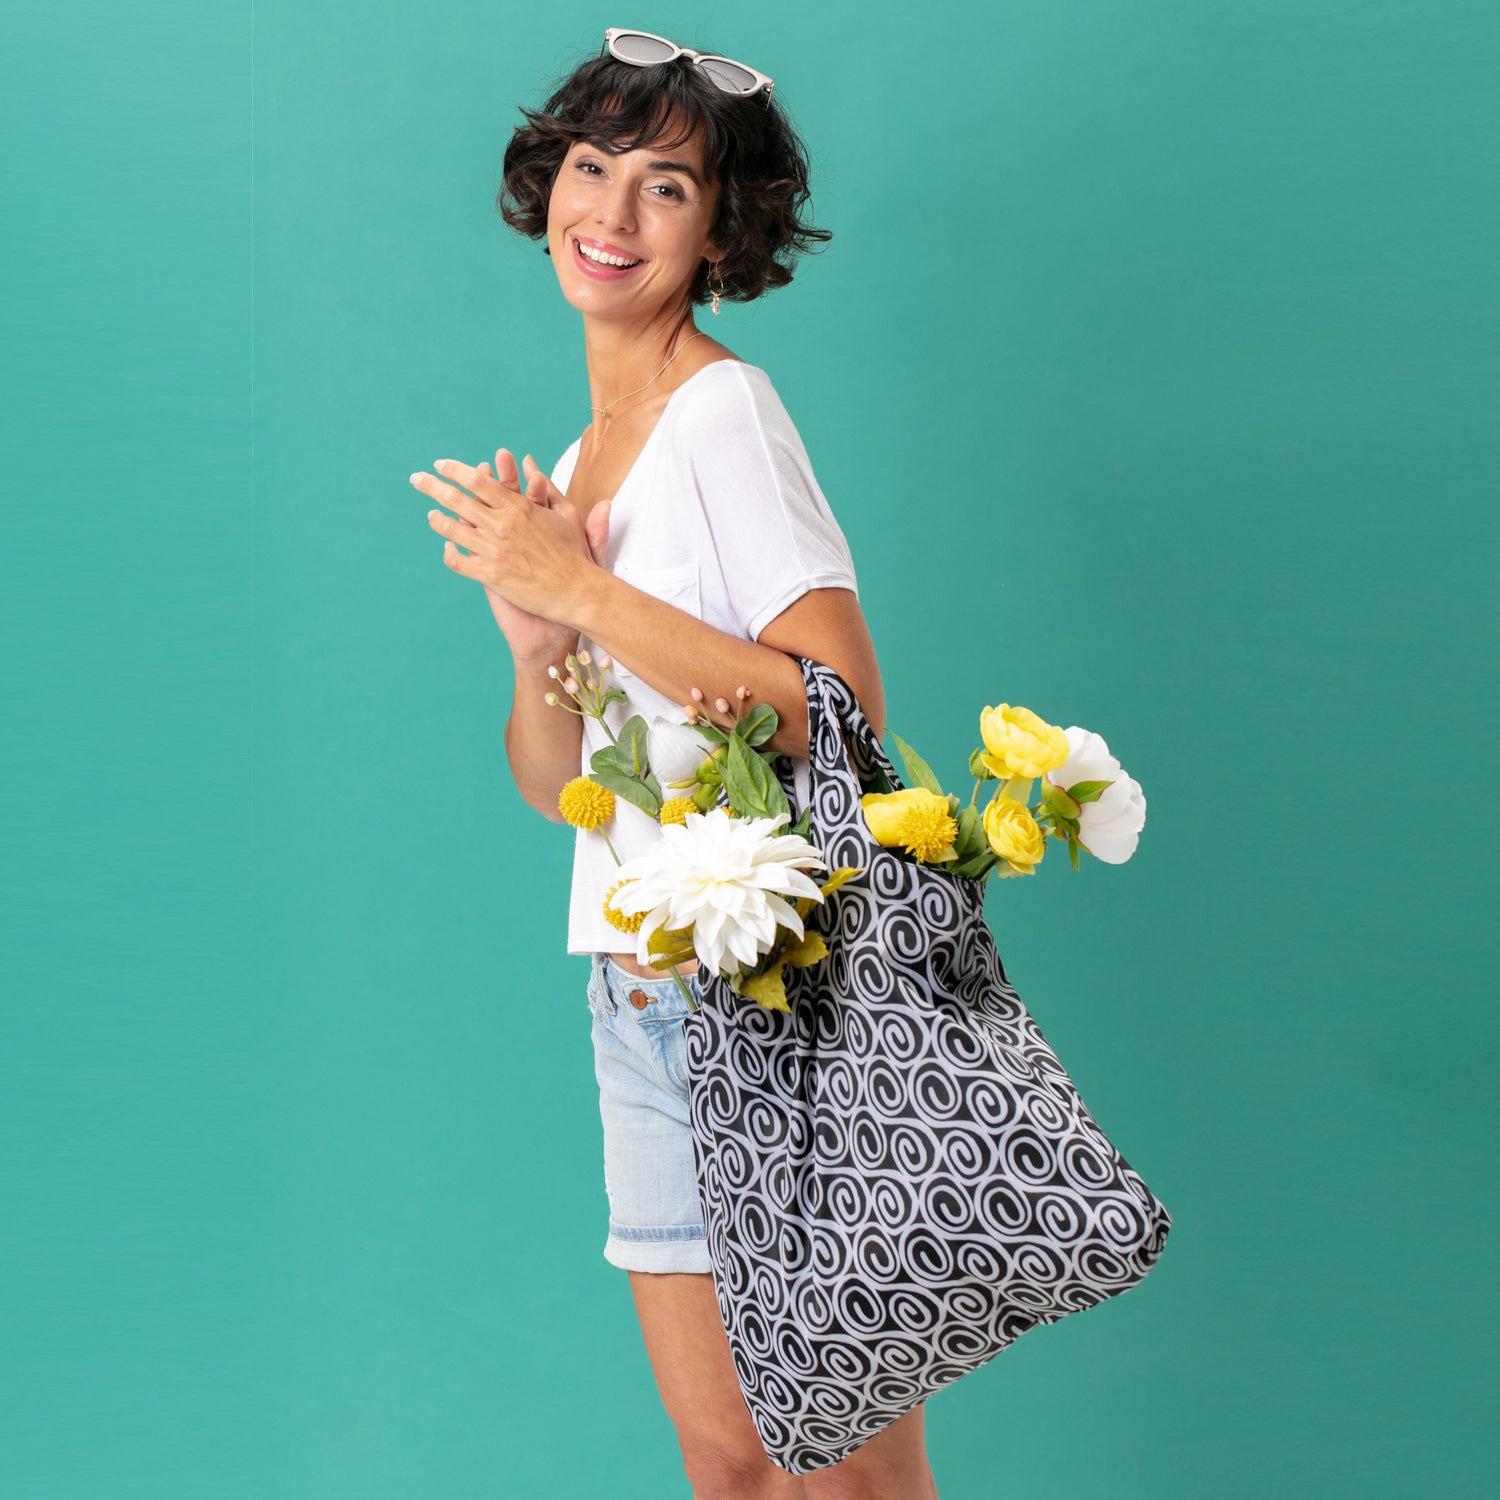 Chanel Reusable Shopping Blu Bag Reusable Shopping Bag - rockflowerpaper